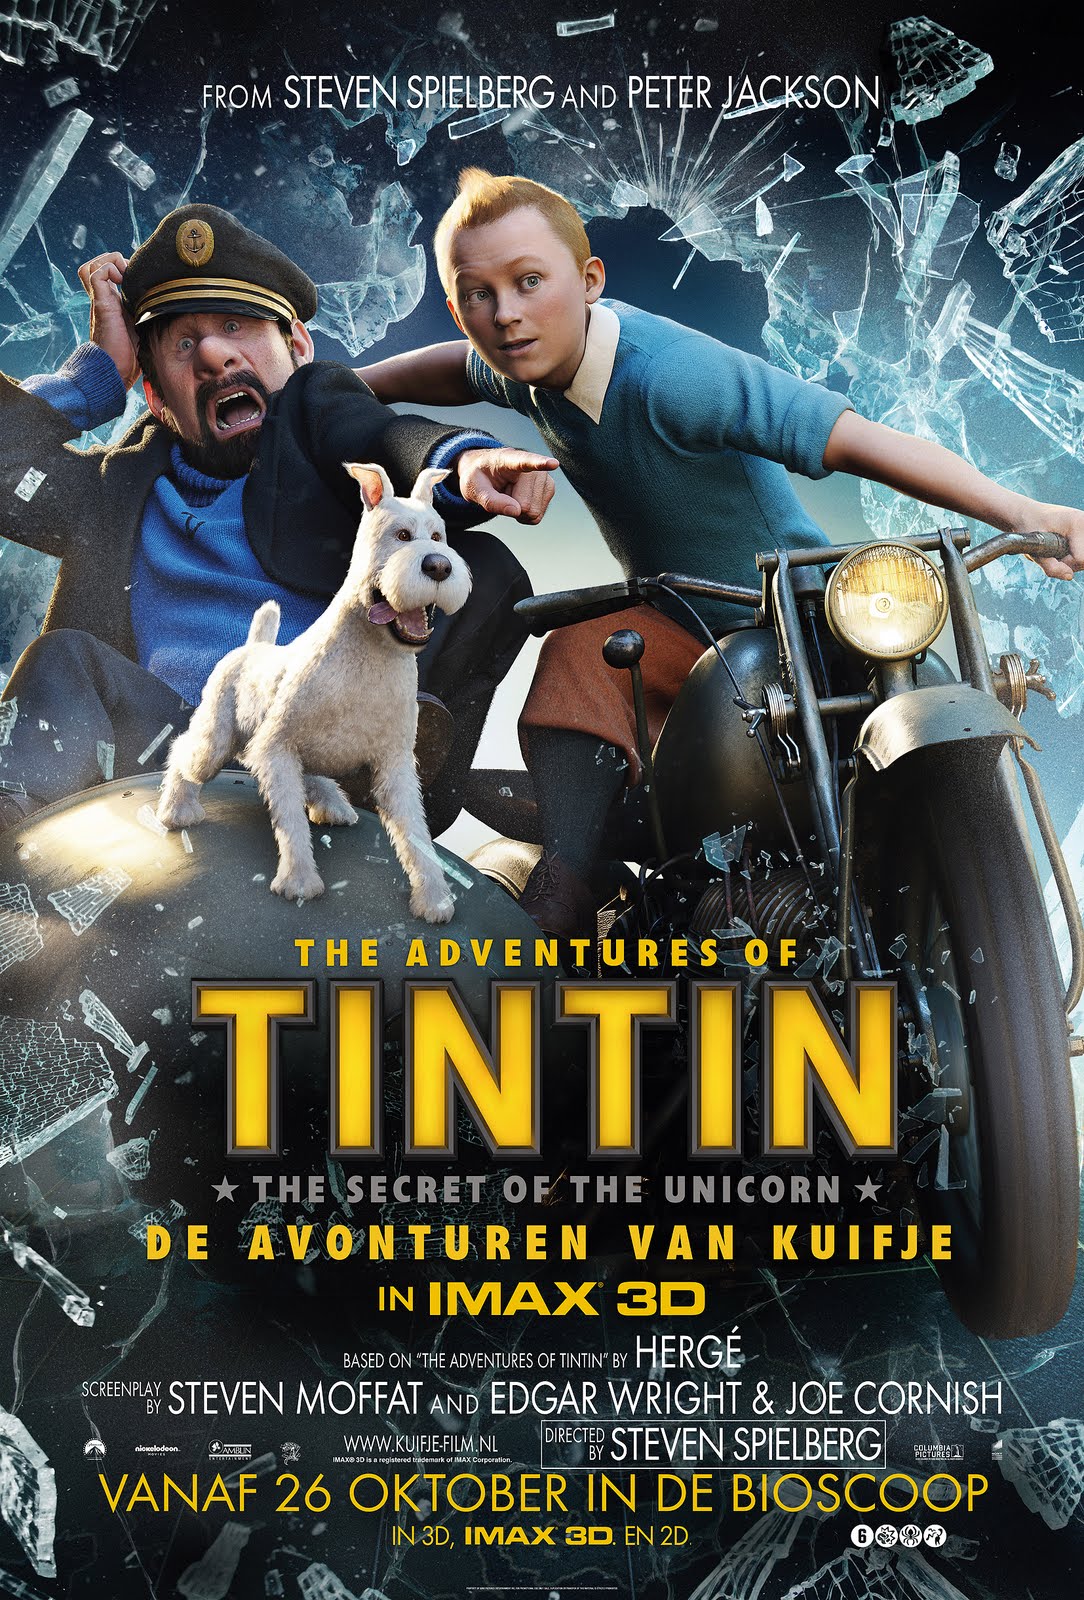 The Adventures Of Tintin #1